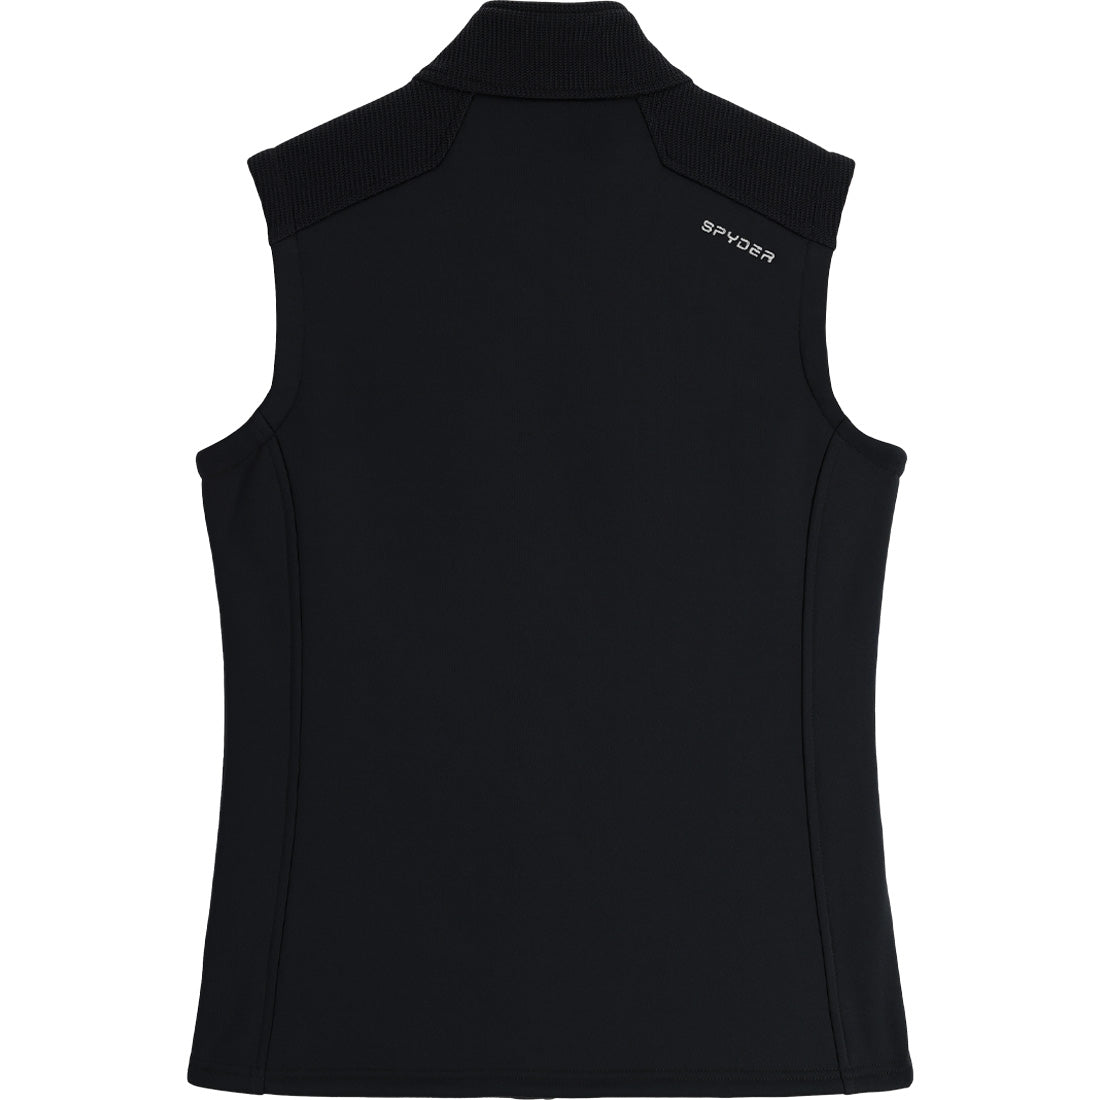 Spyder Bandita Vest (Past Season) - Women's